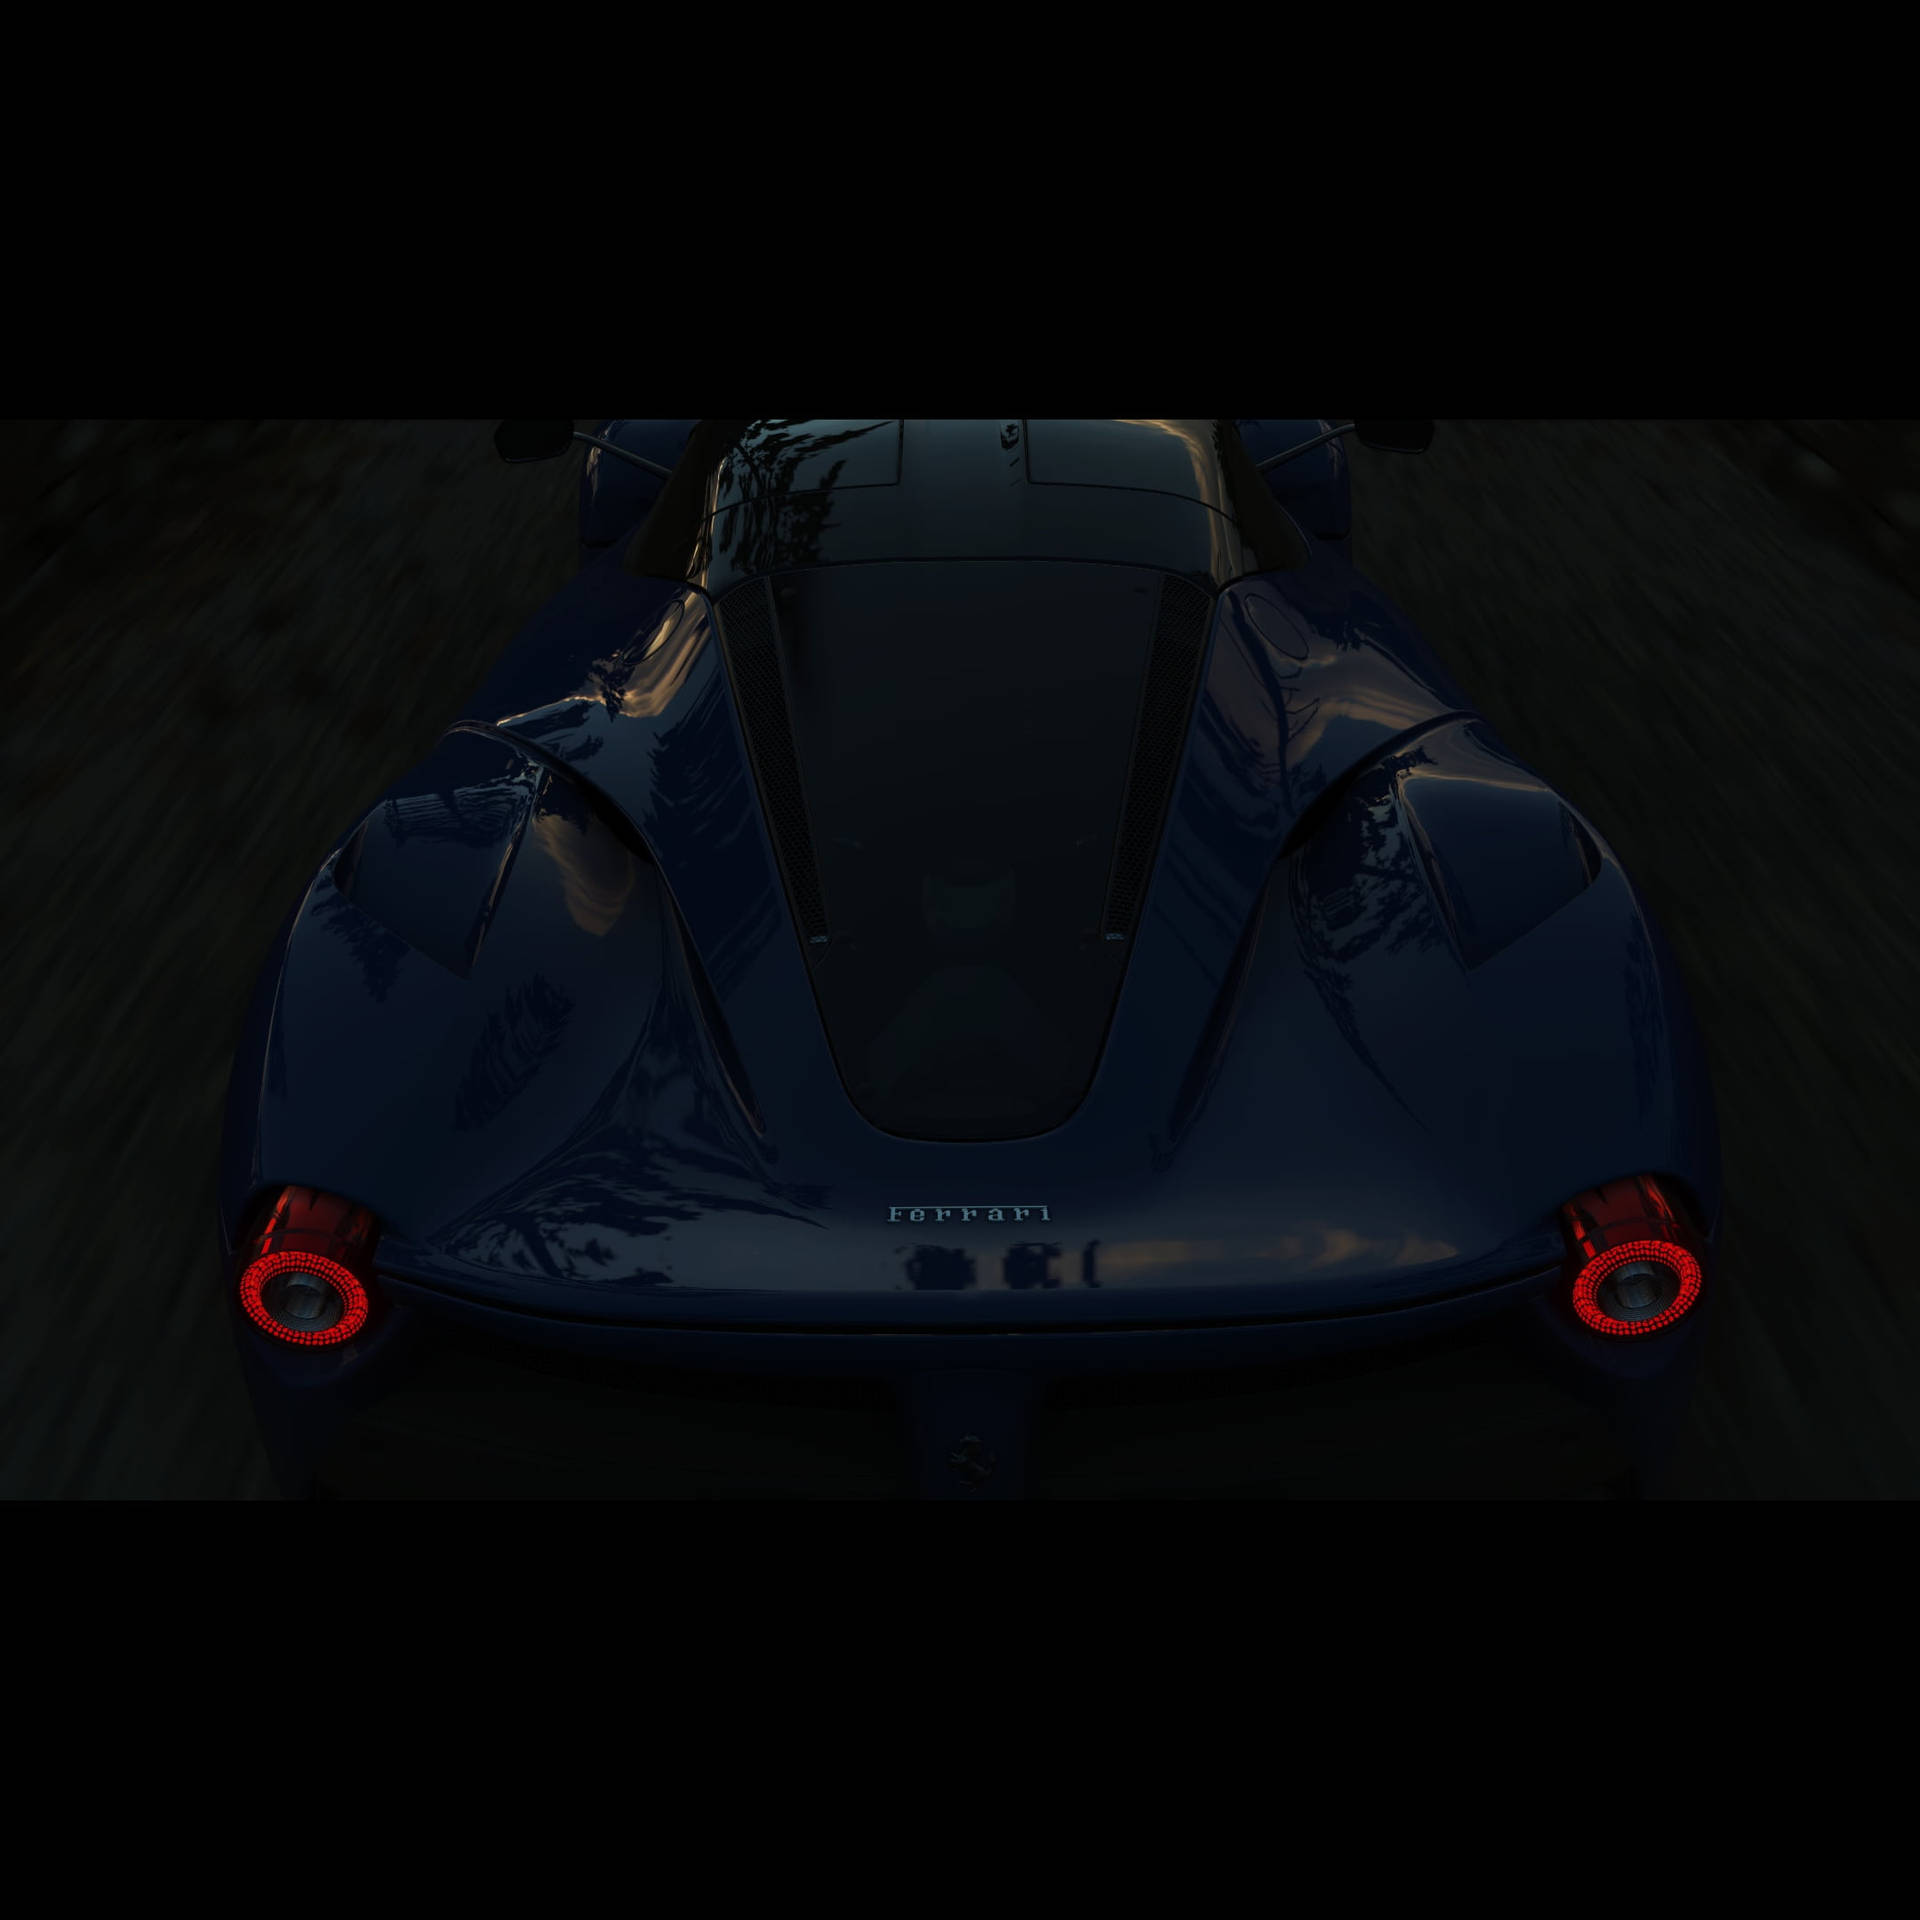 Forza Horizon 4 Laferrari Background